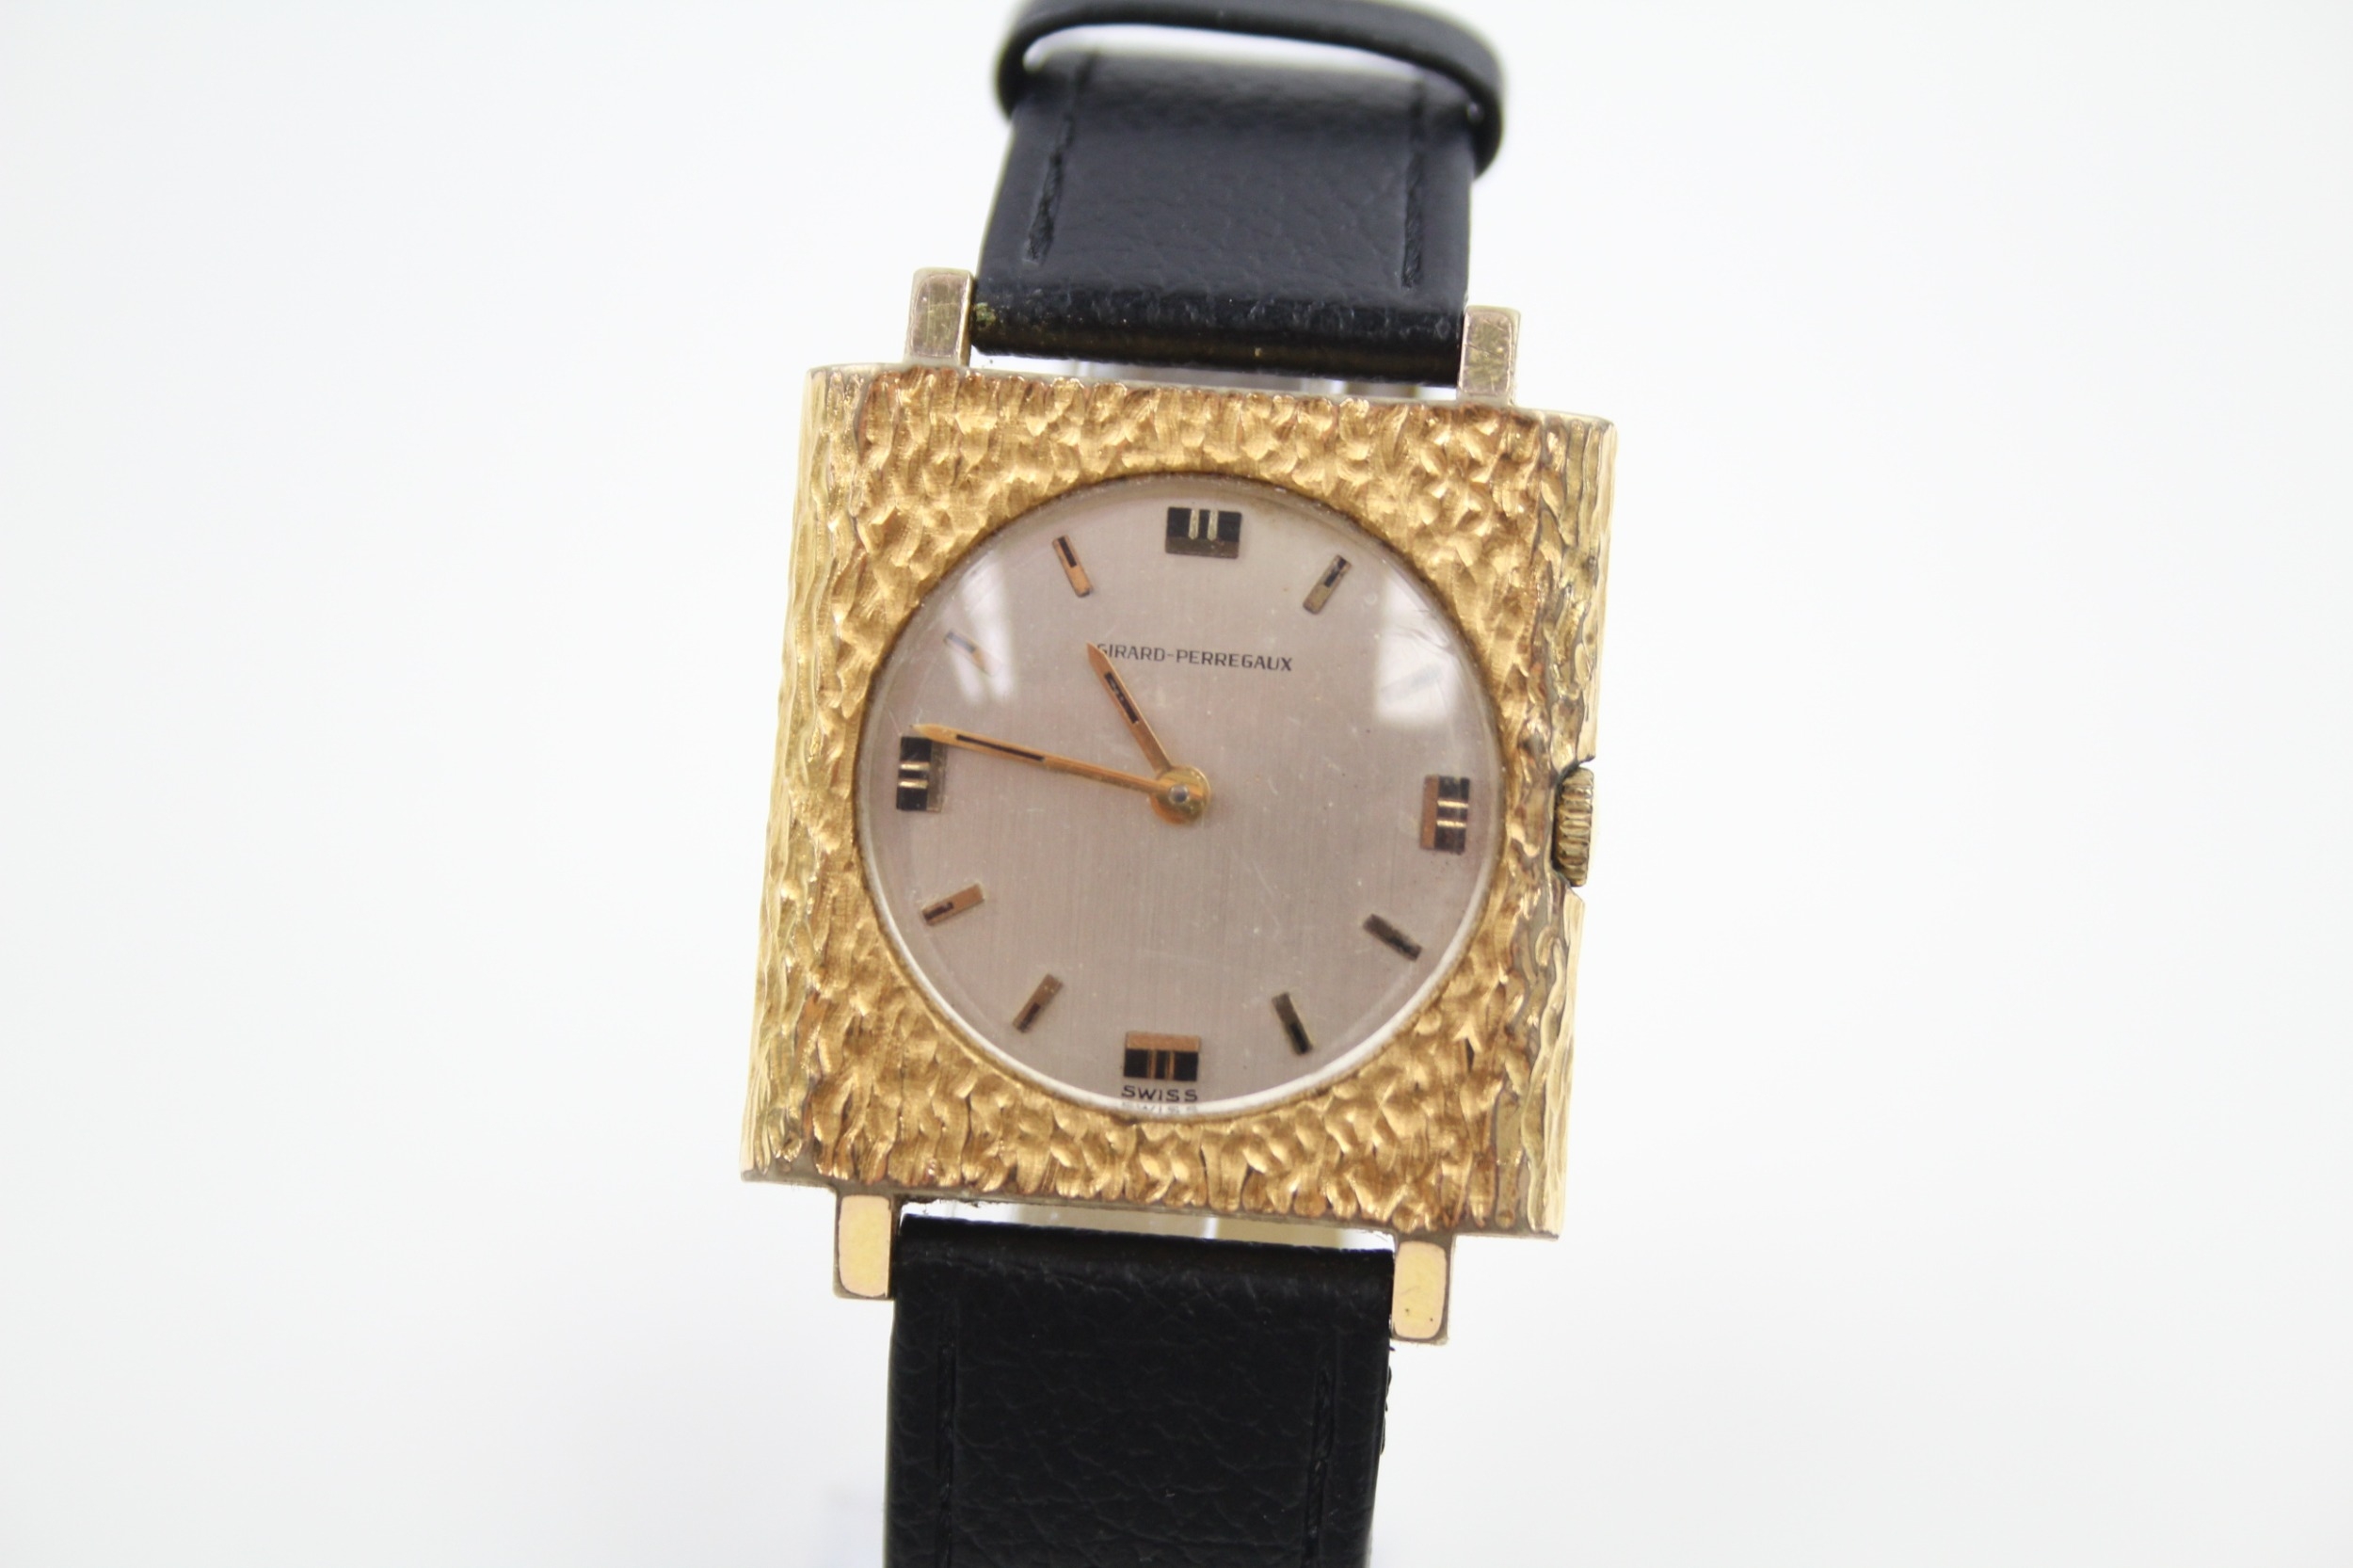 Girard Perregaux c. 1970s Gold Tone Wristwatch Hand Wind WORKING - Image 2 of 4